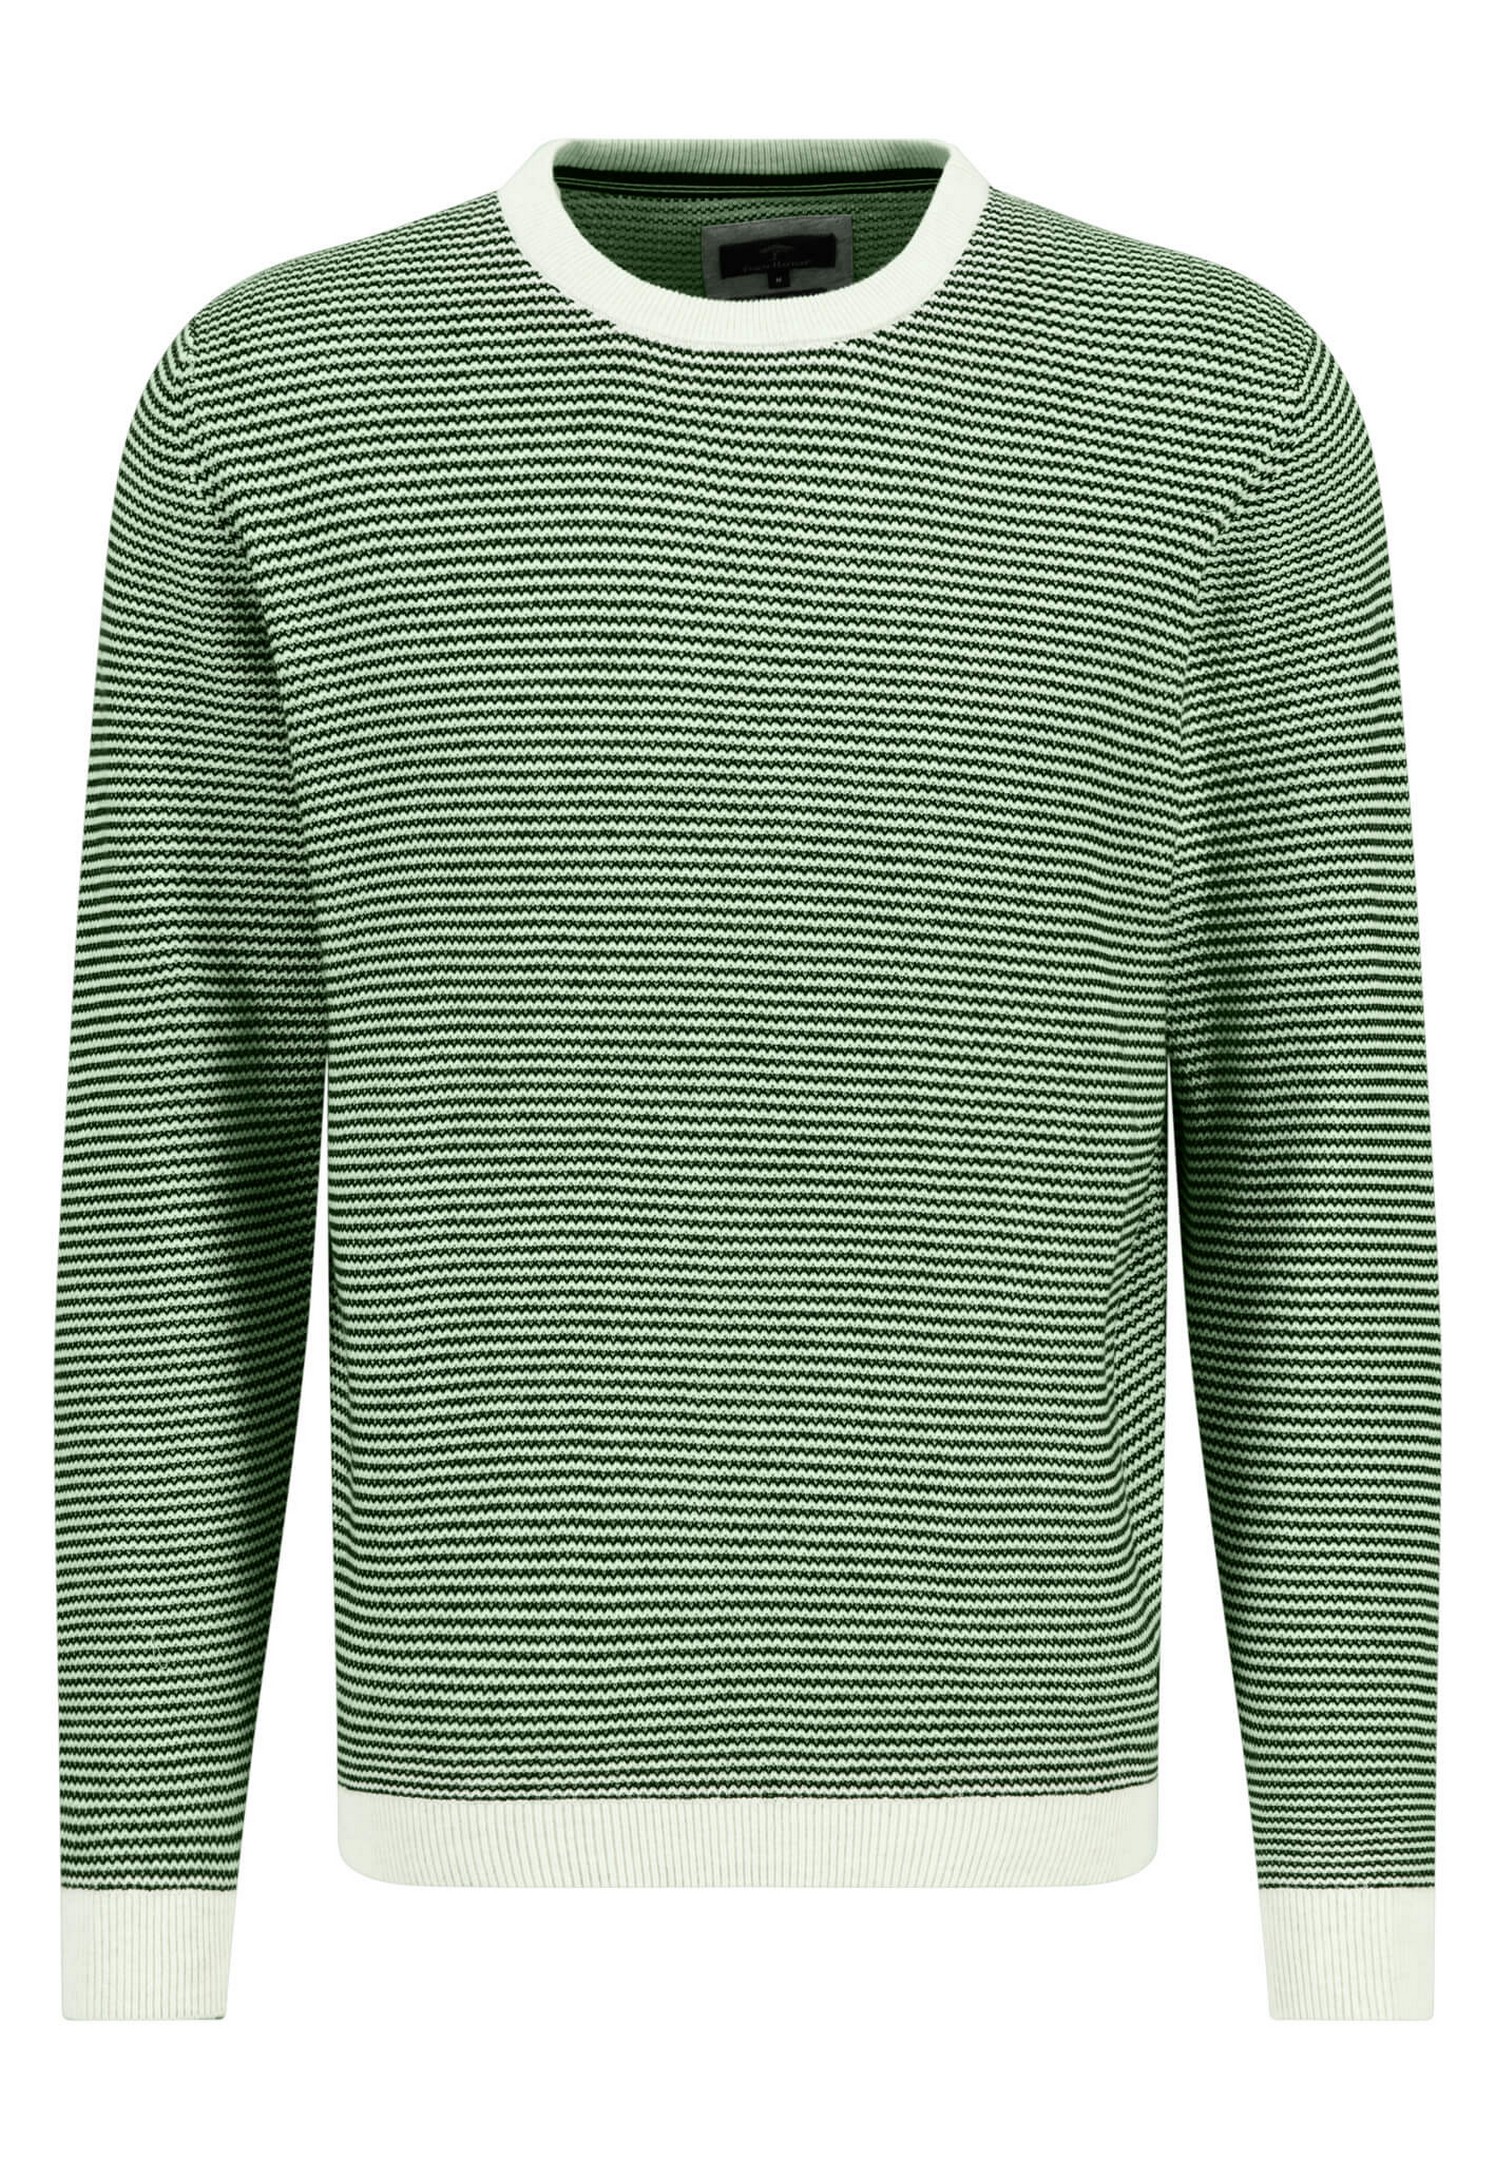 Fynch-Hatton Two-Tone Stripe Texture Knit O-Neck Superfine Cotton Pullover Spring  Green | Jan Rozing Men\'s Fashion